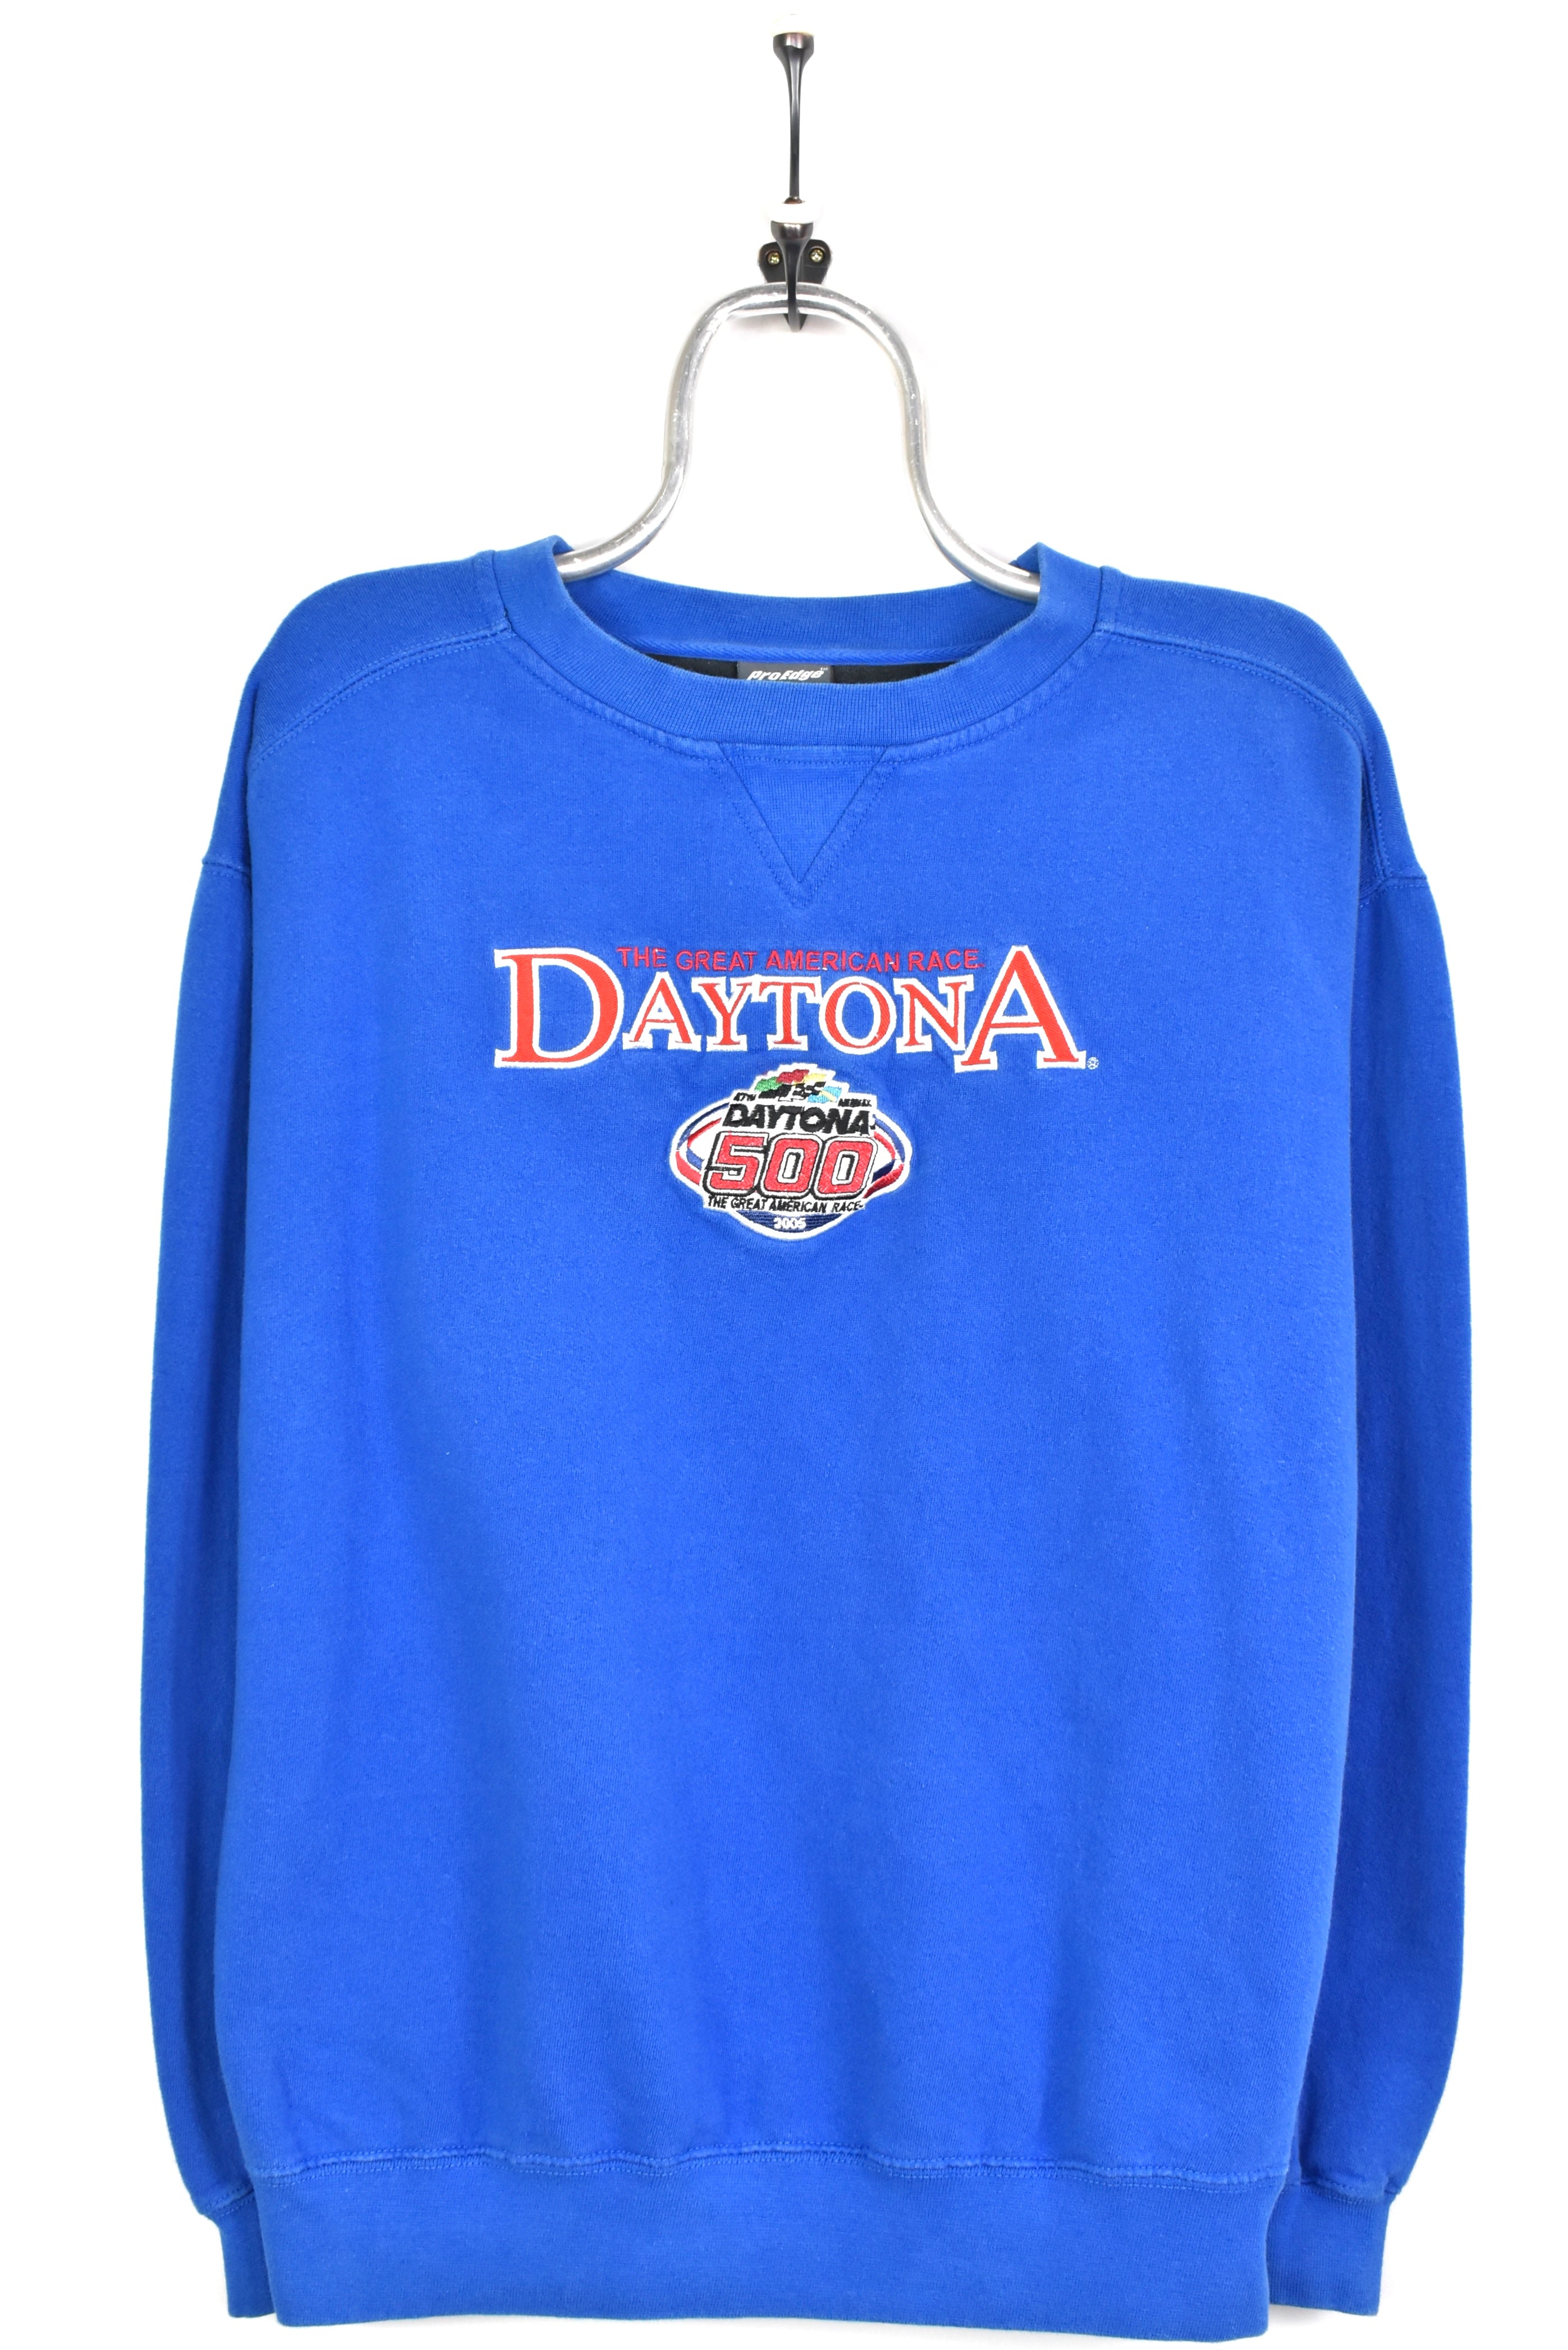 Vintage NASCAR Daytona embroidered blue sweatshirt | Large NASCAR / RACING